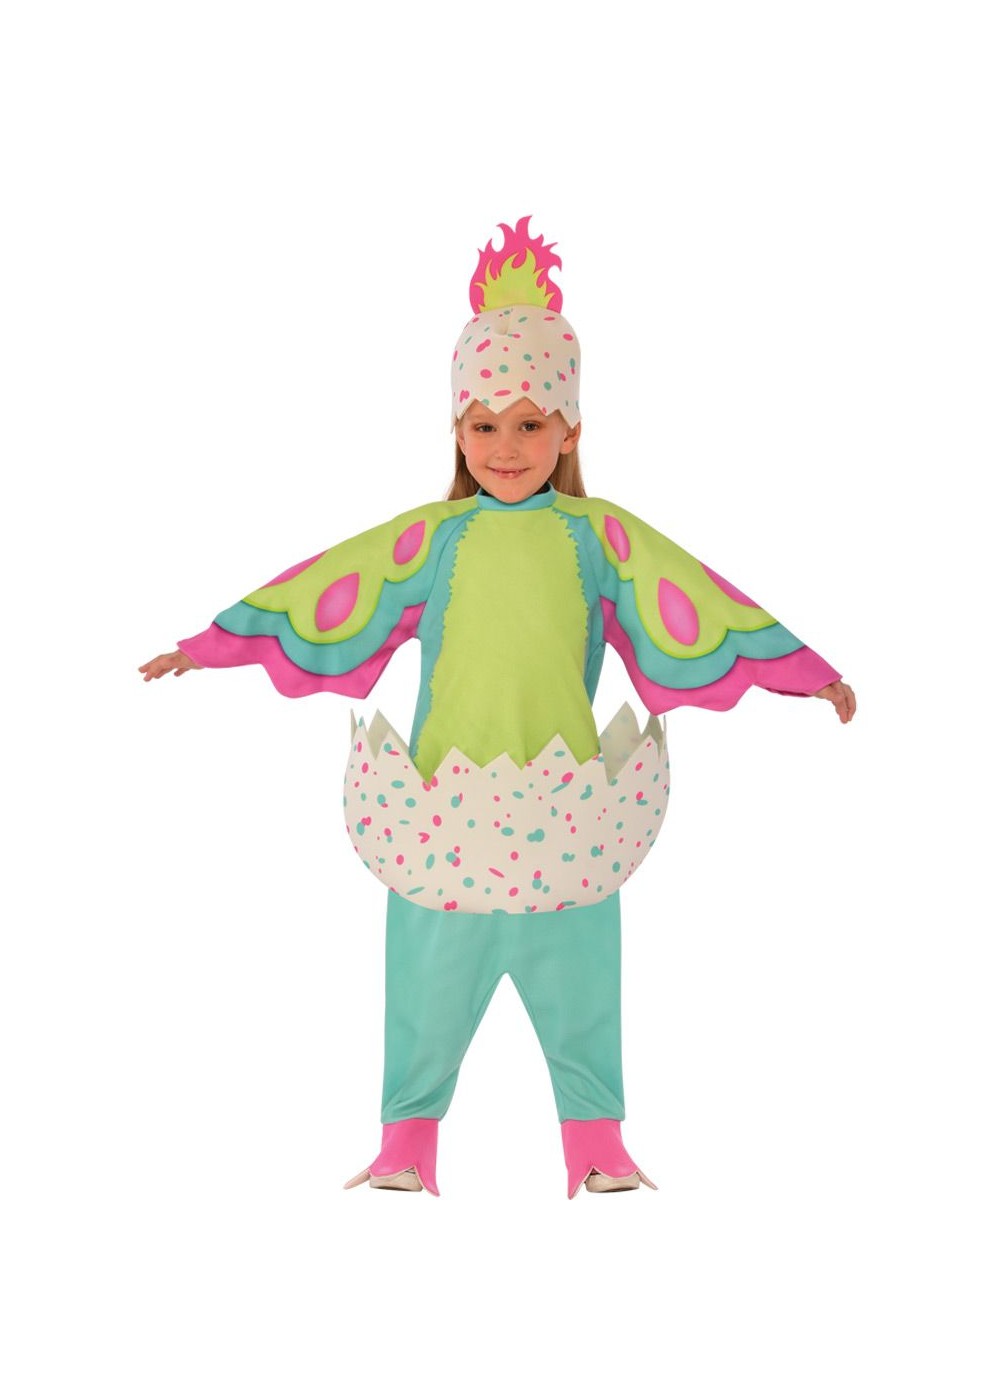 Hatchimal Pengualas Girls Costume